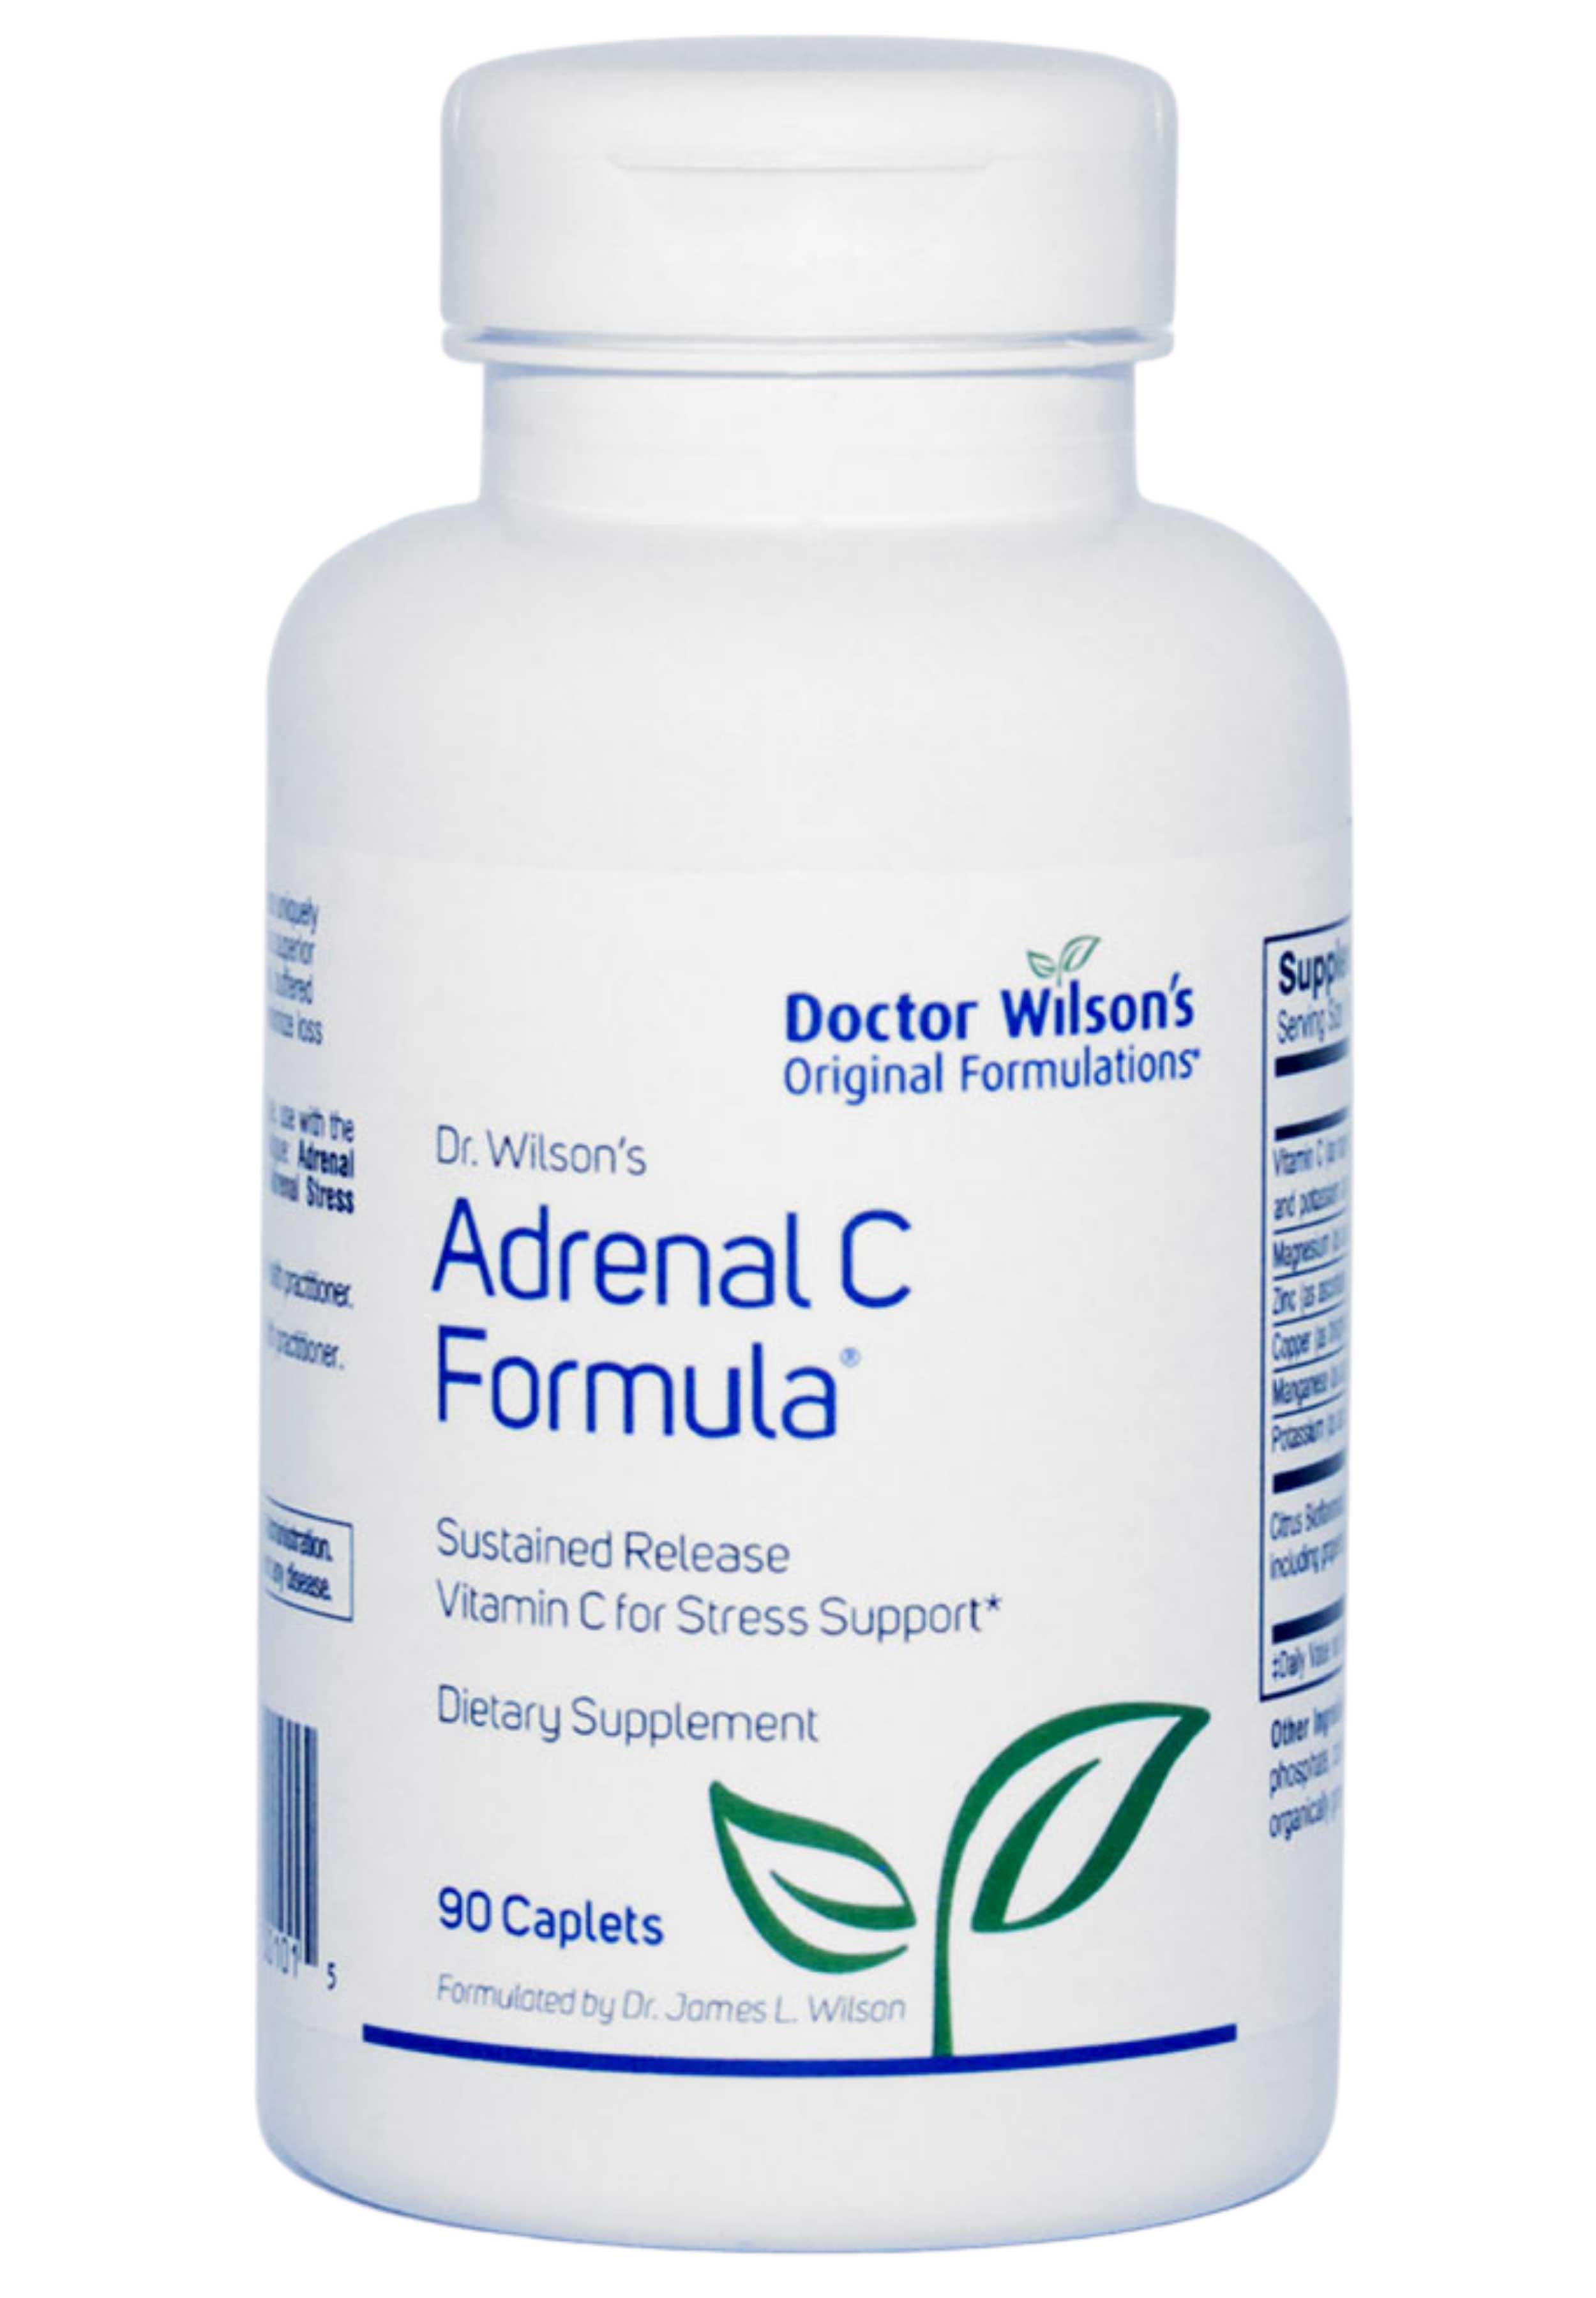 Doctor Wilson's Original Formulations Adrenal C Formula